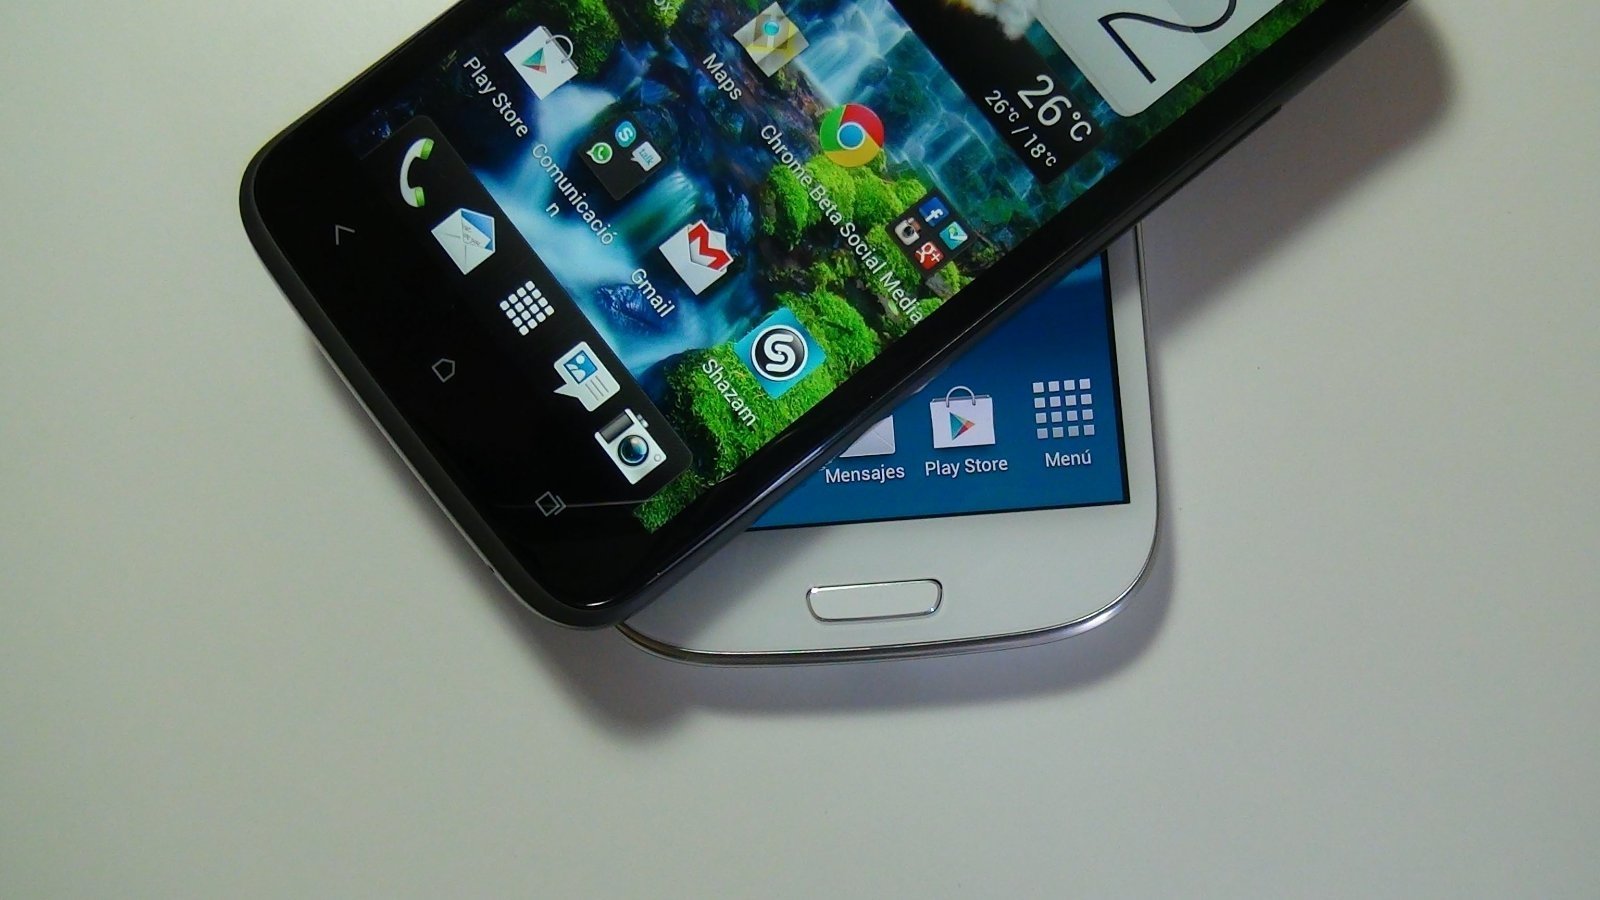 HTC One X vs Samsung Galaxy S III detalle